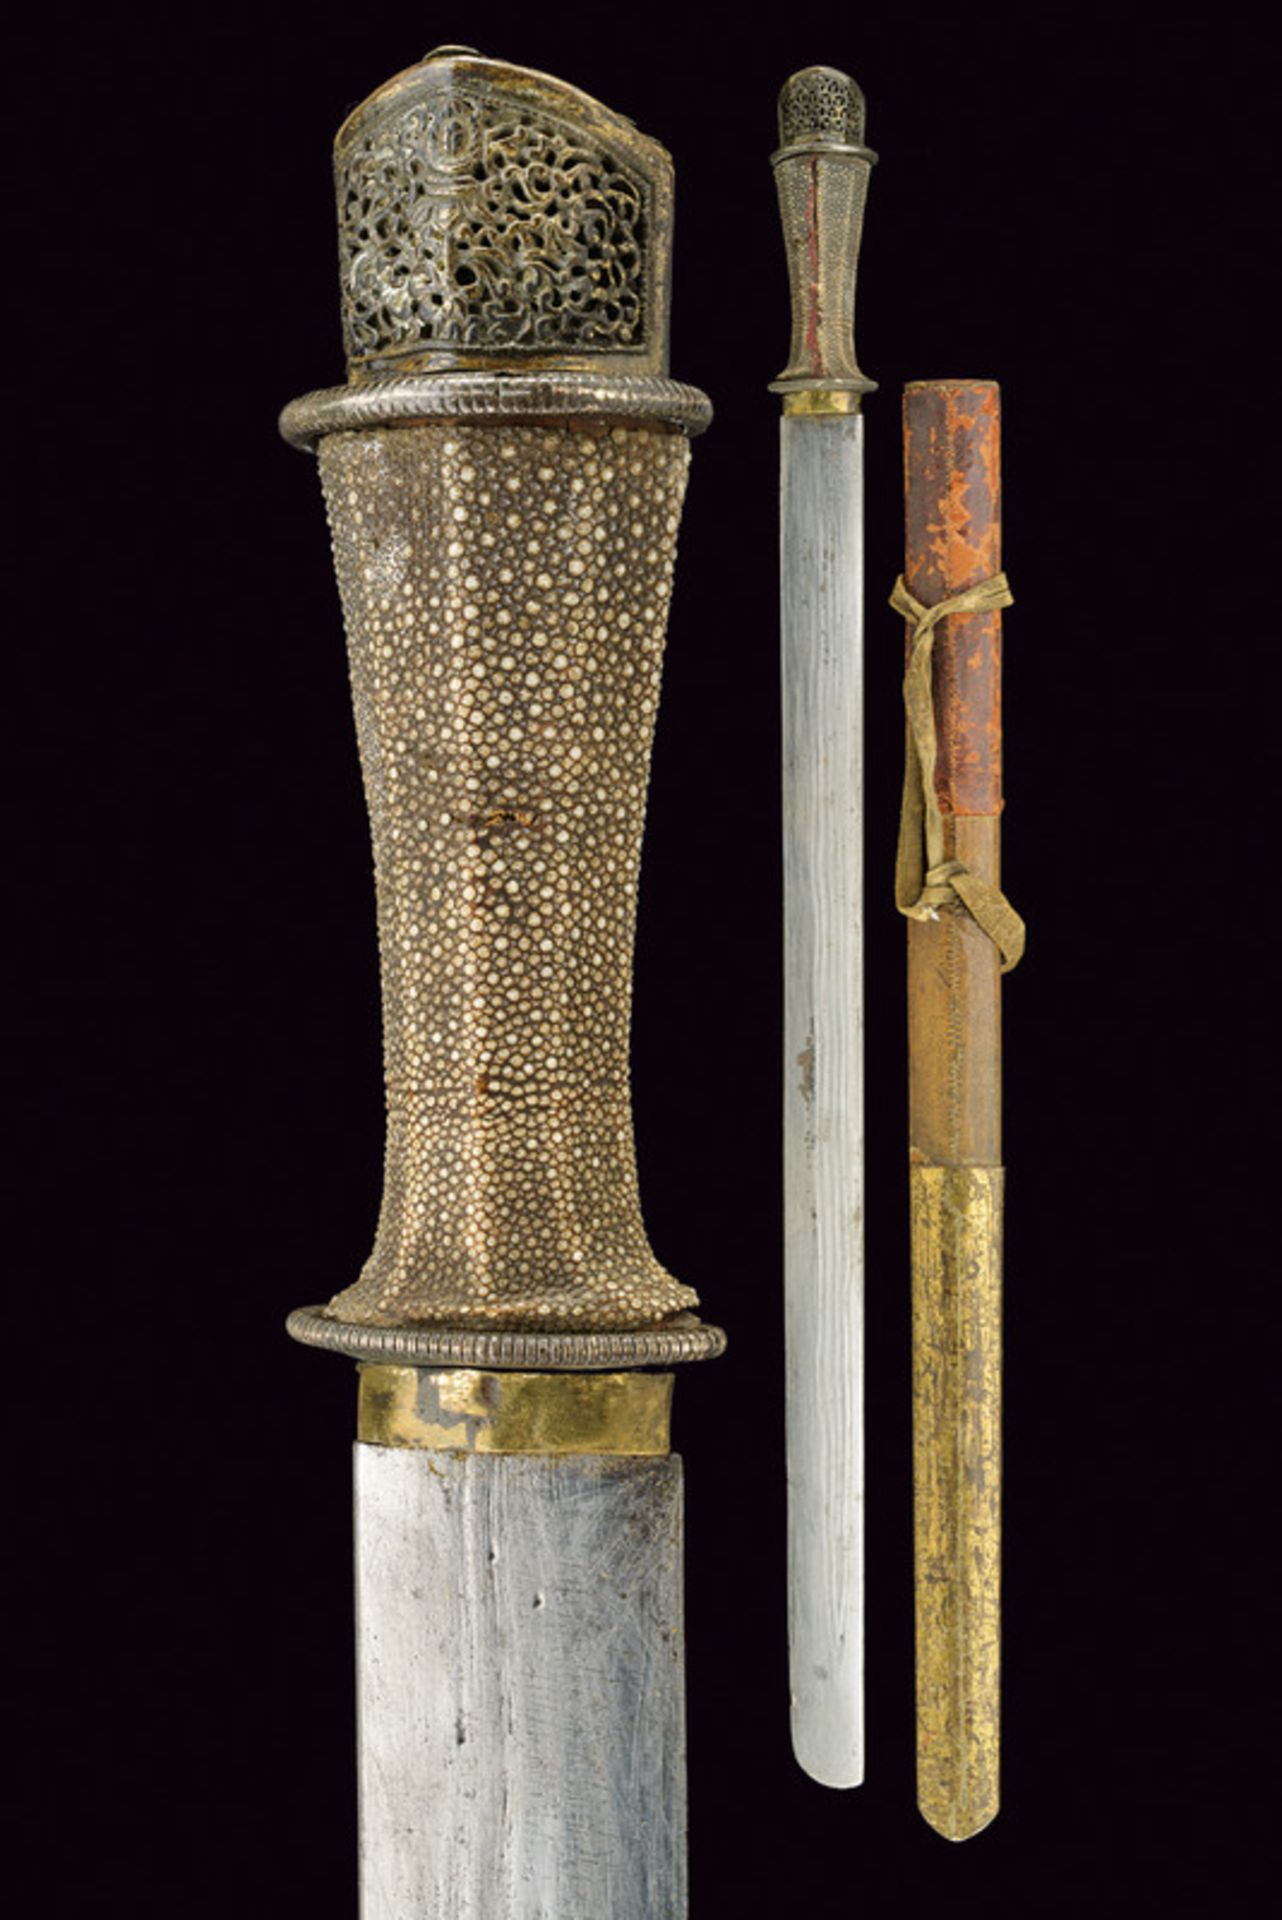 A Jian (sword)